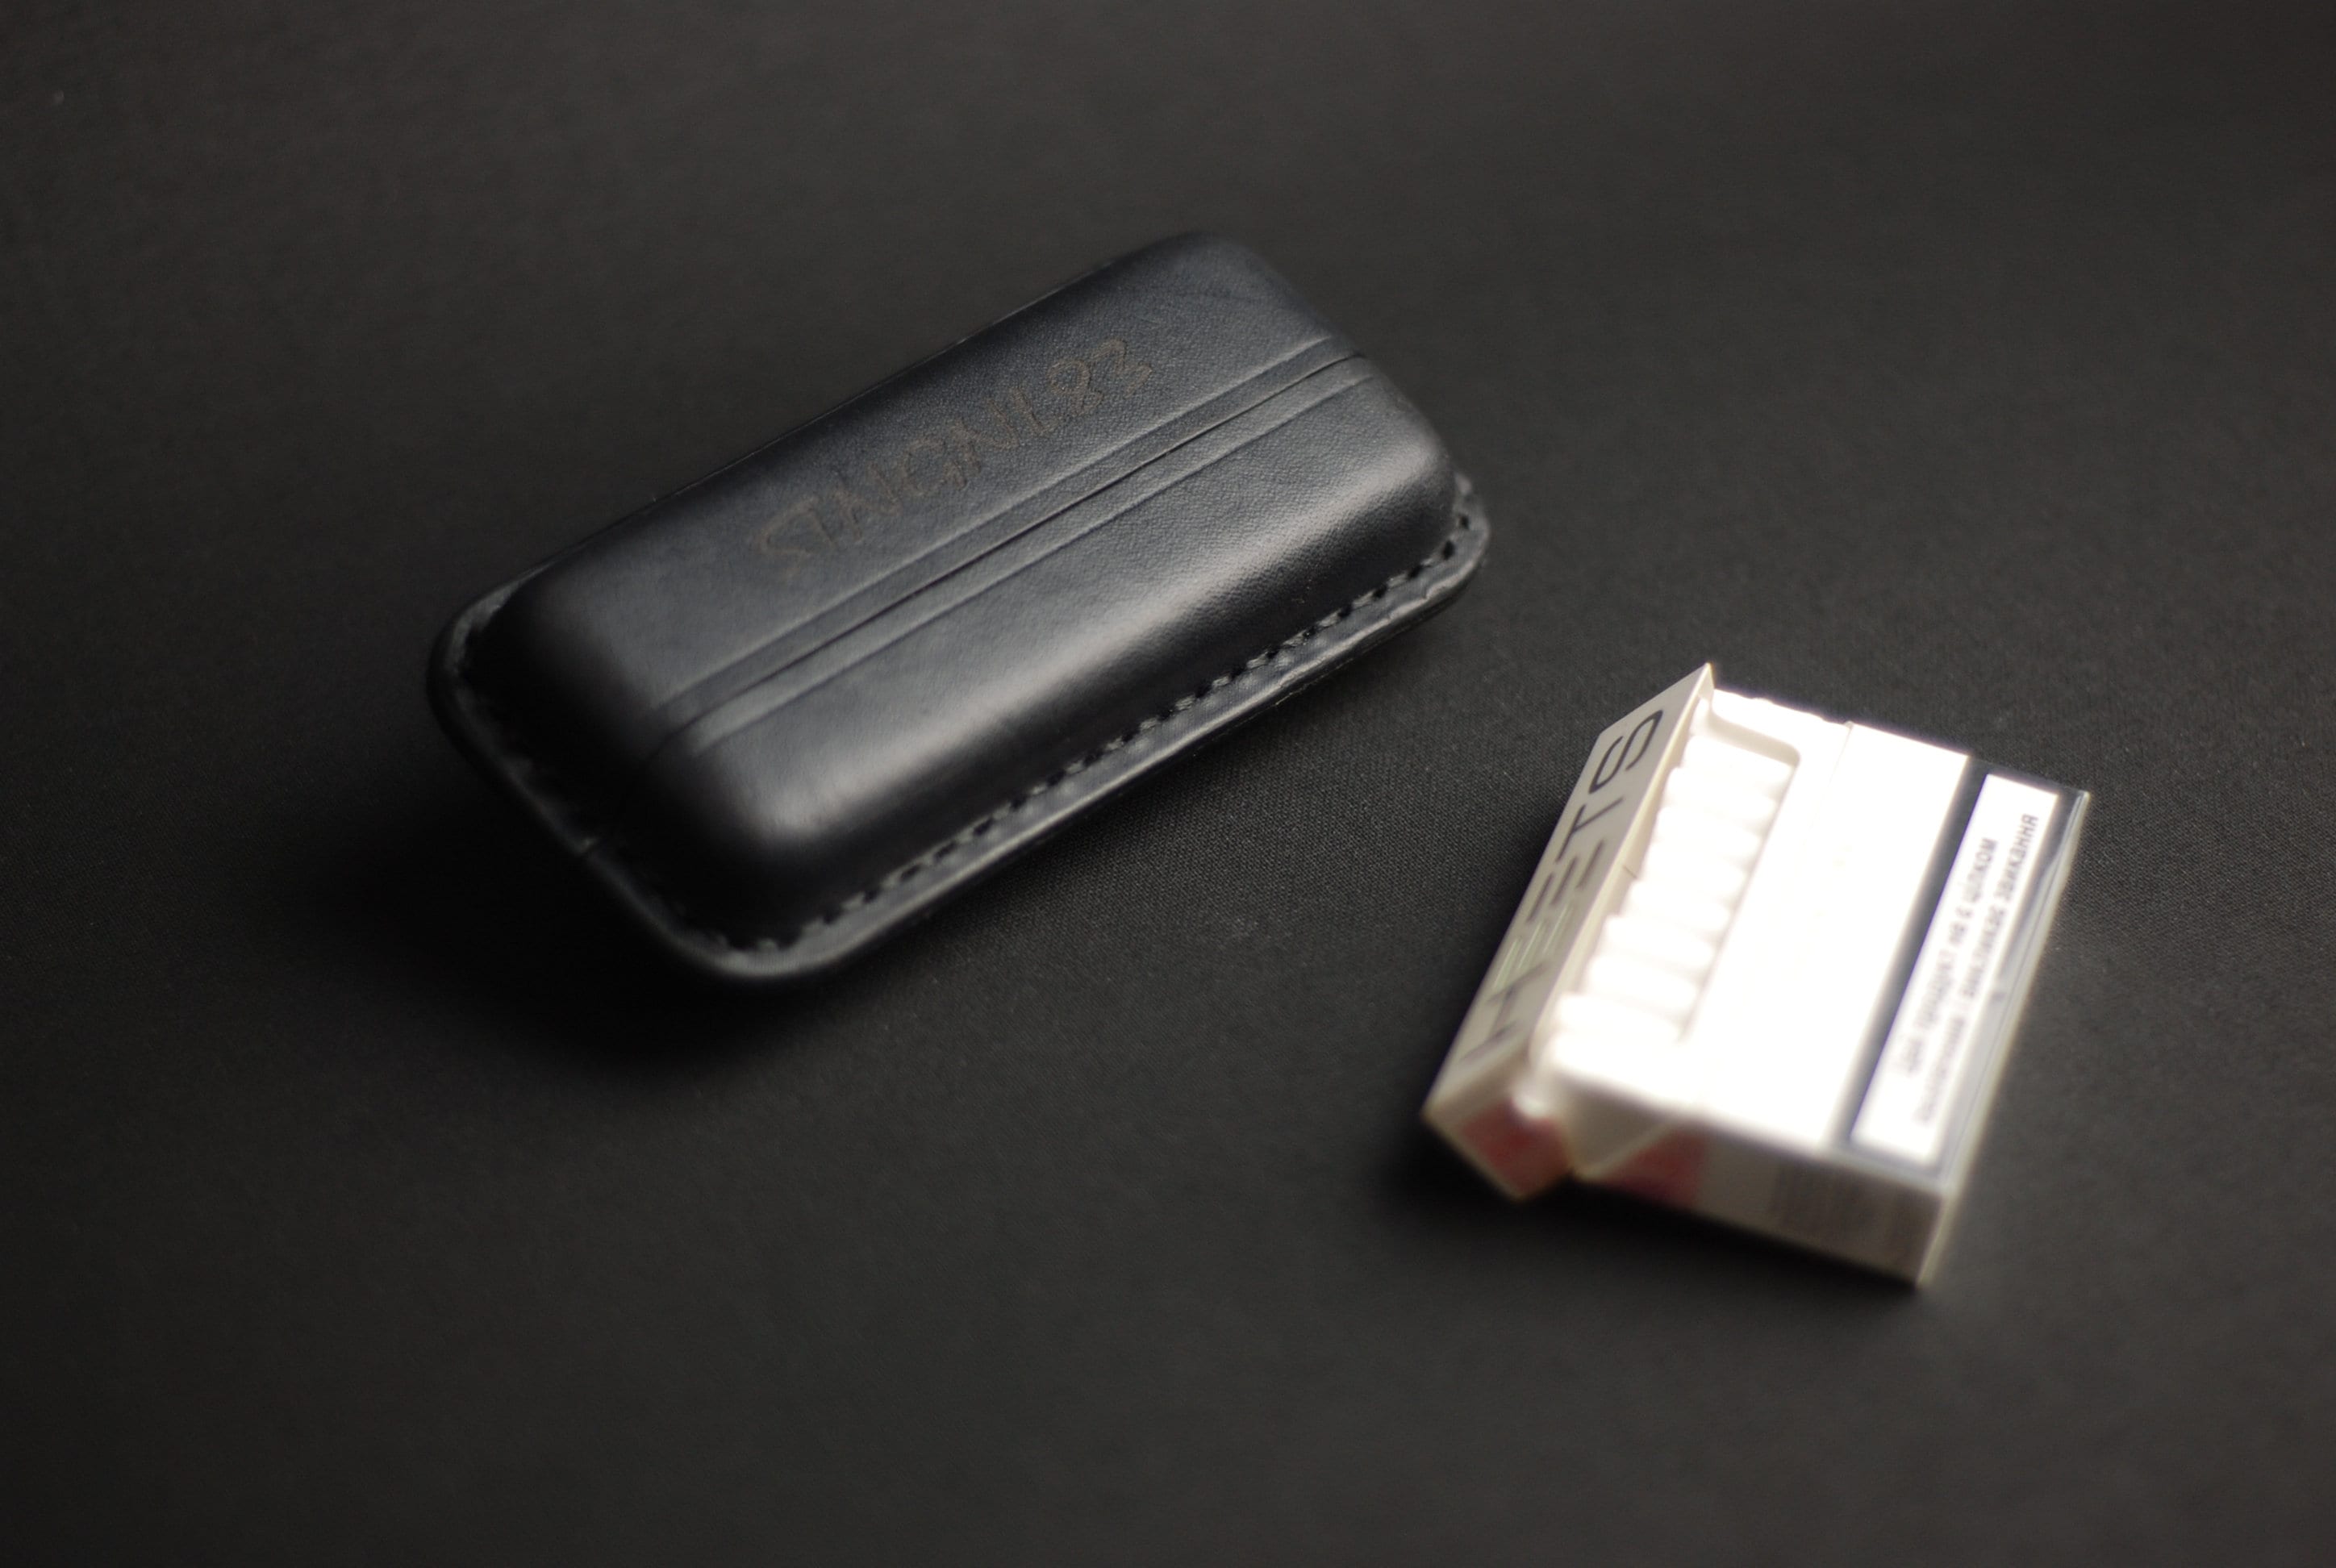 COOL Zigtt.Etui für IQOS Heets + Zigaretten chrom sortiert - Cigarette  Cases - Cigarette Accessories - Products